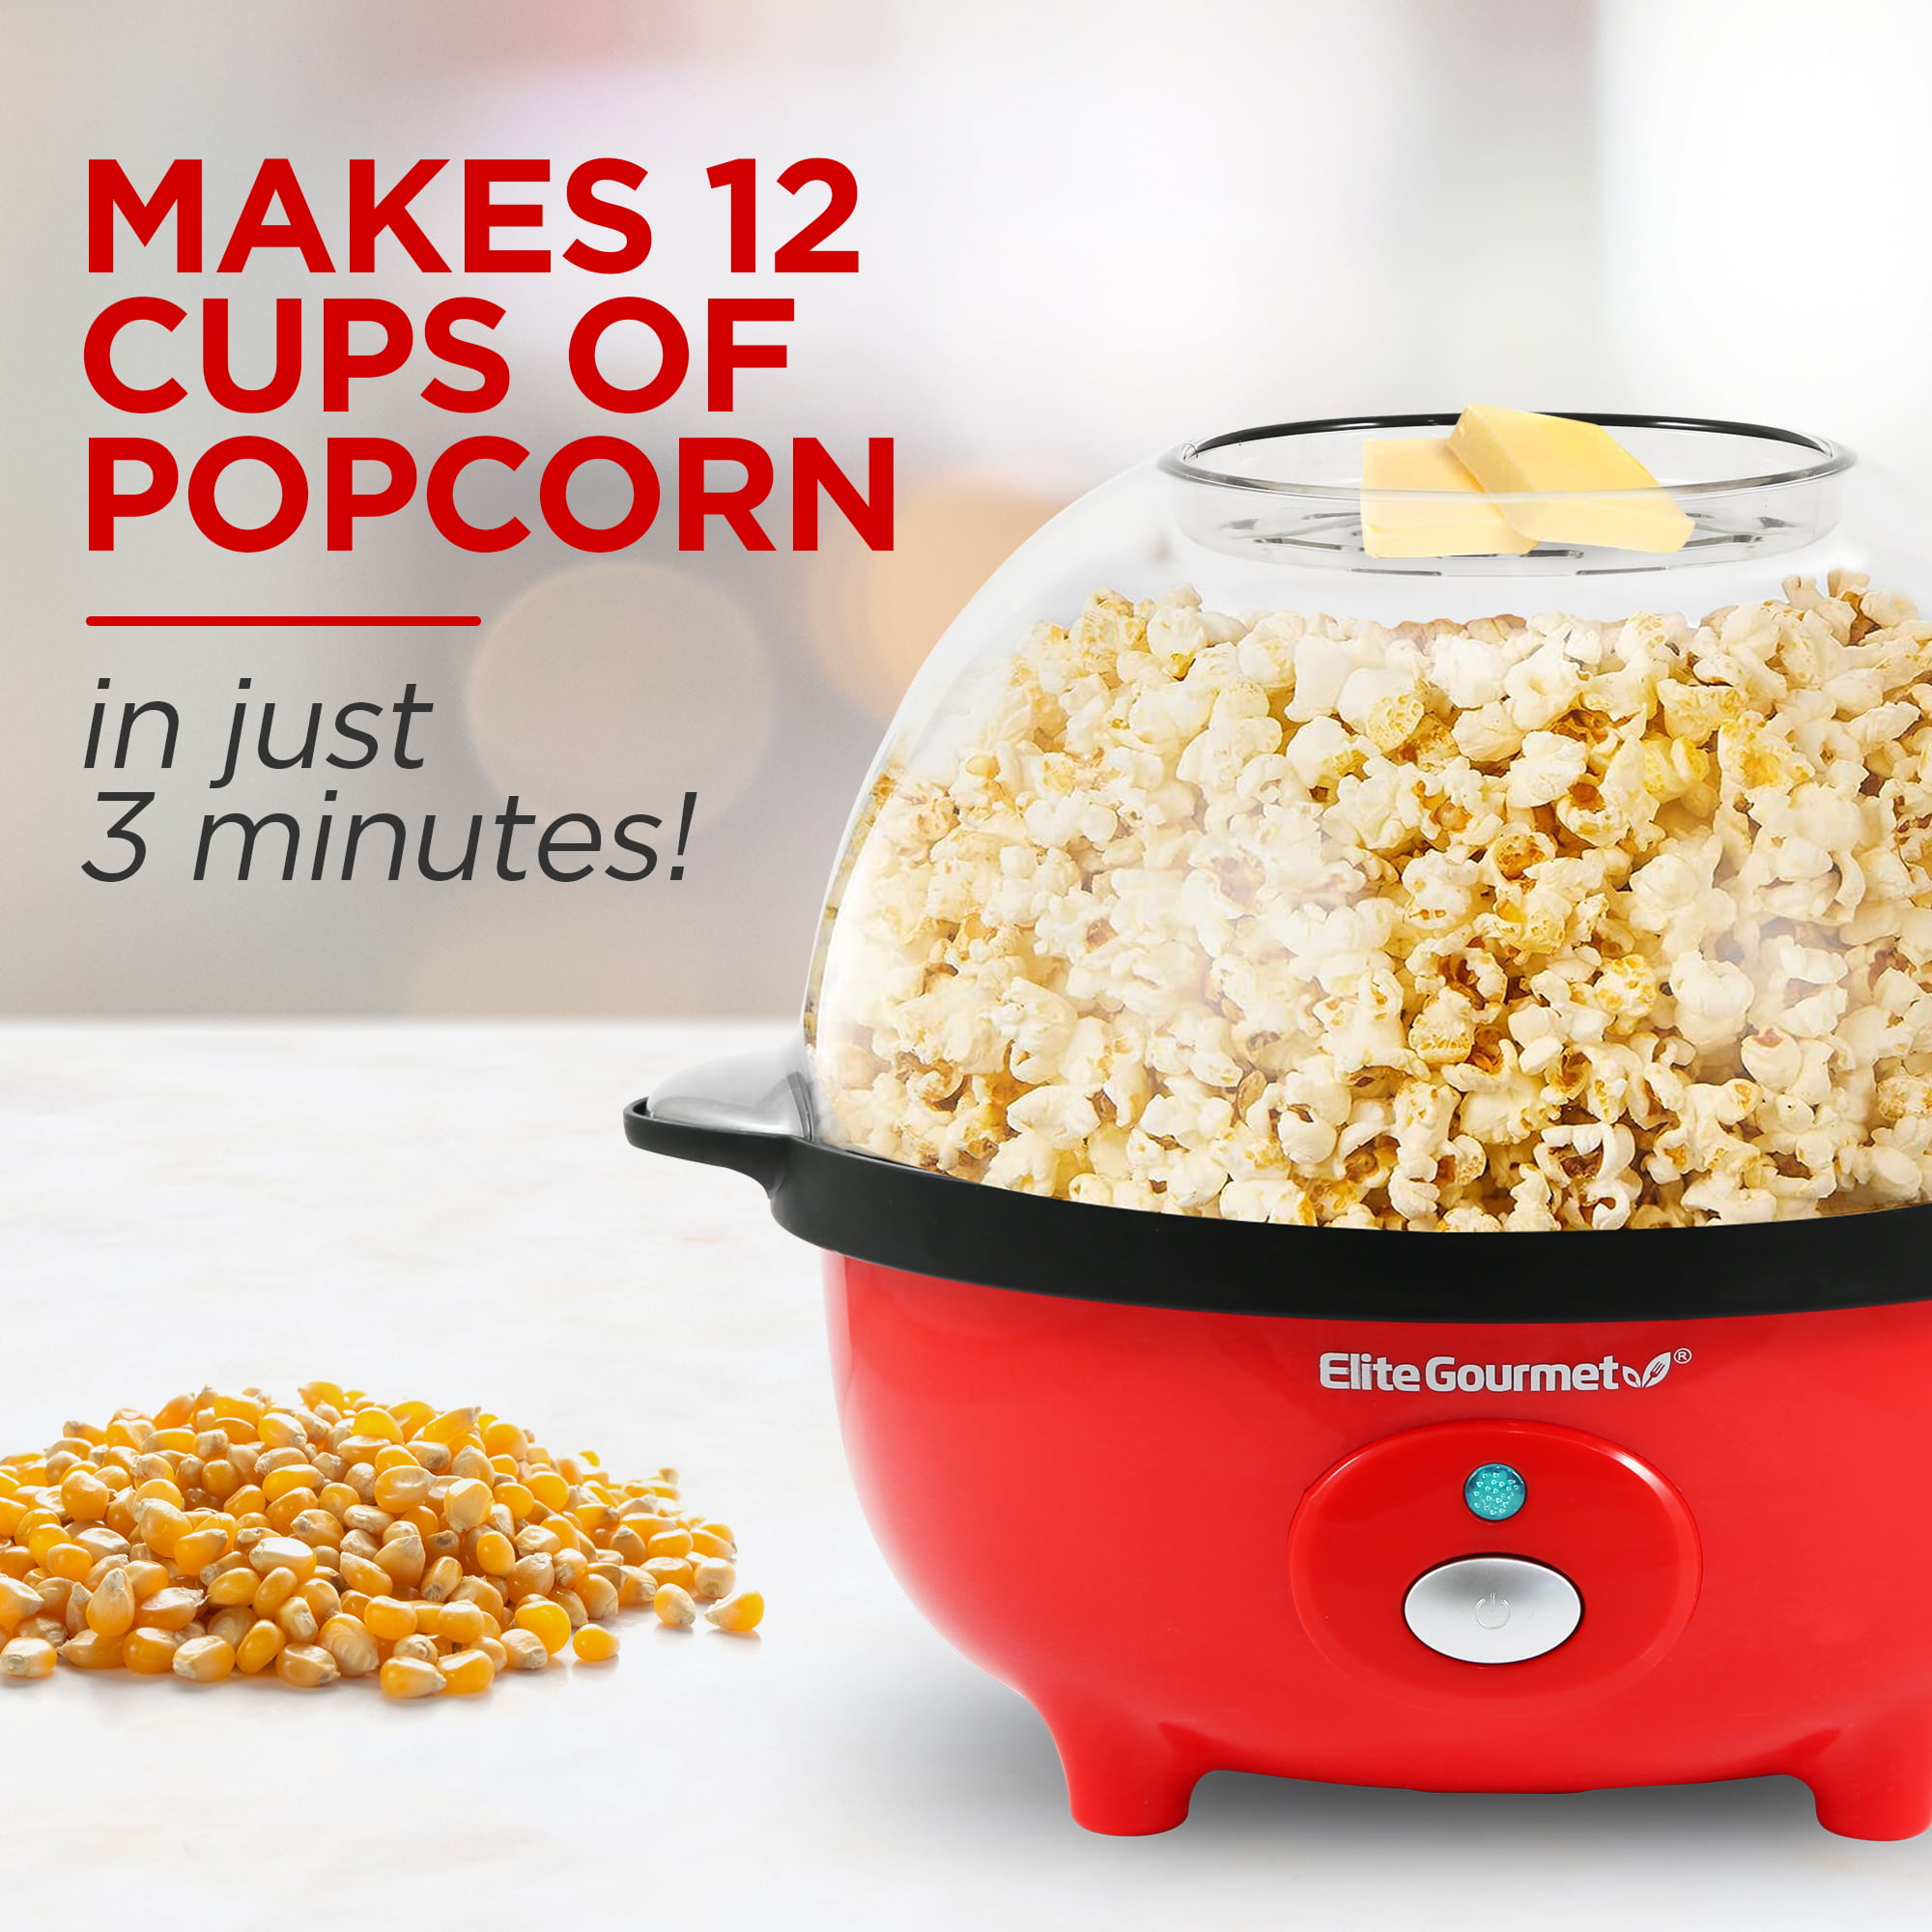 Cuisinart CPM-700 Popcorn Maker Grey/Red for sale online 